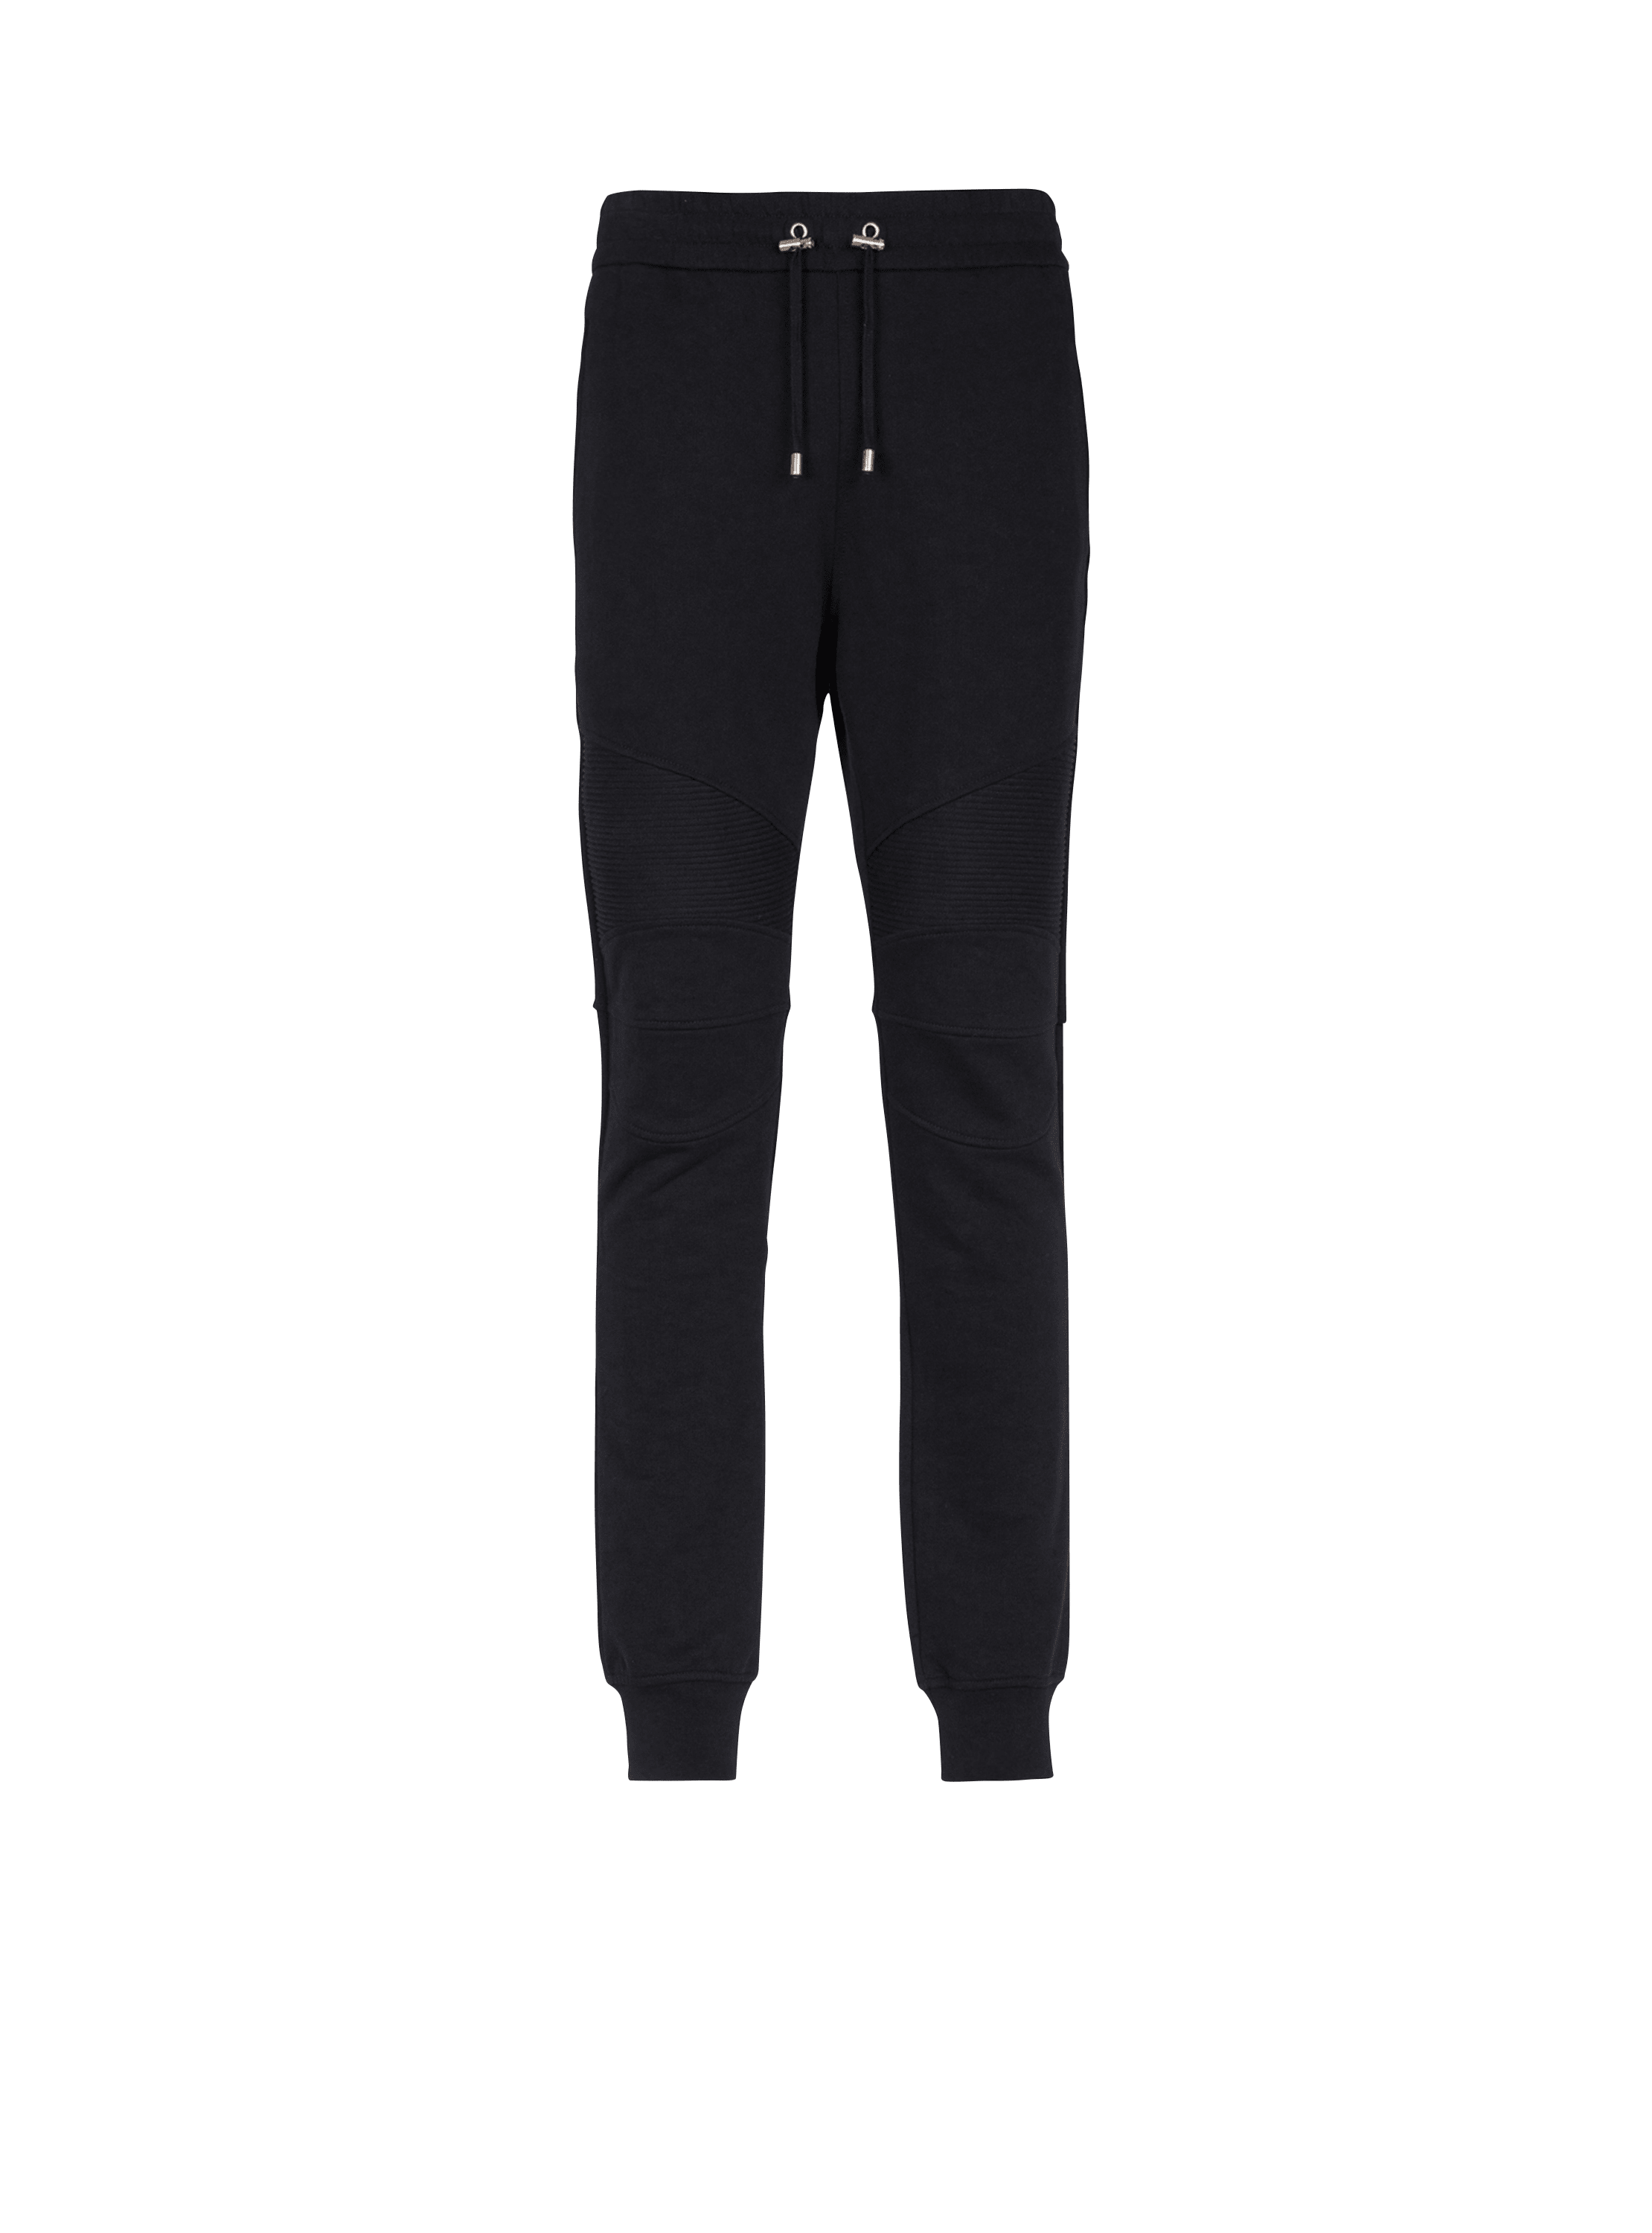 Brandy legation region Cotton sweatpants with Balmain Paris logo black - Men | BALMAIN